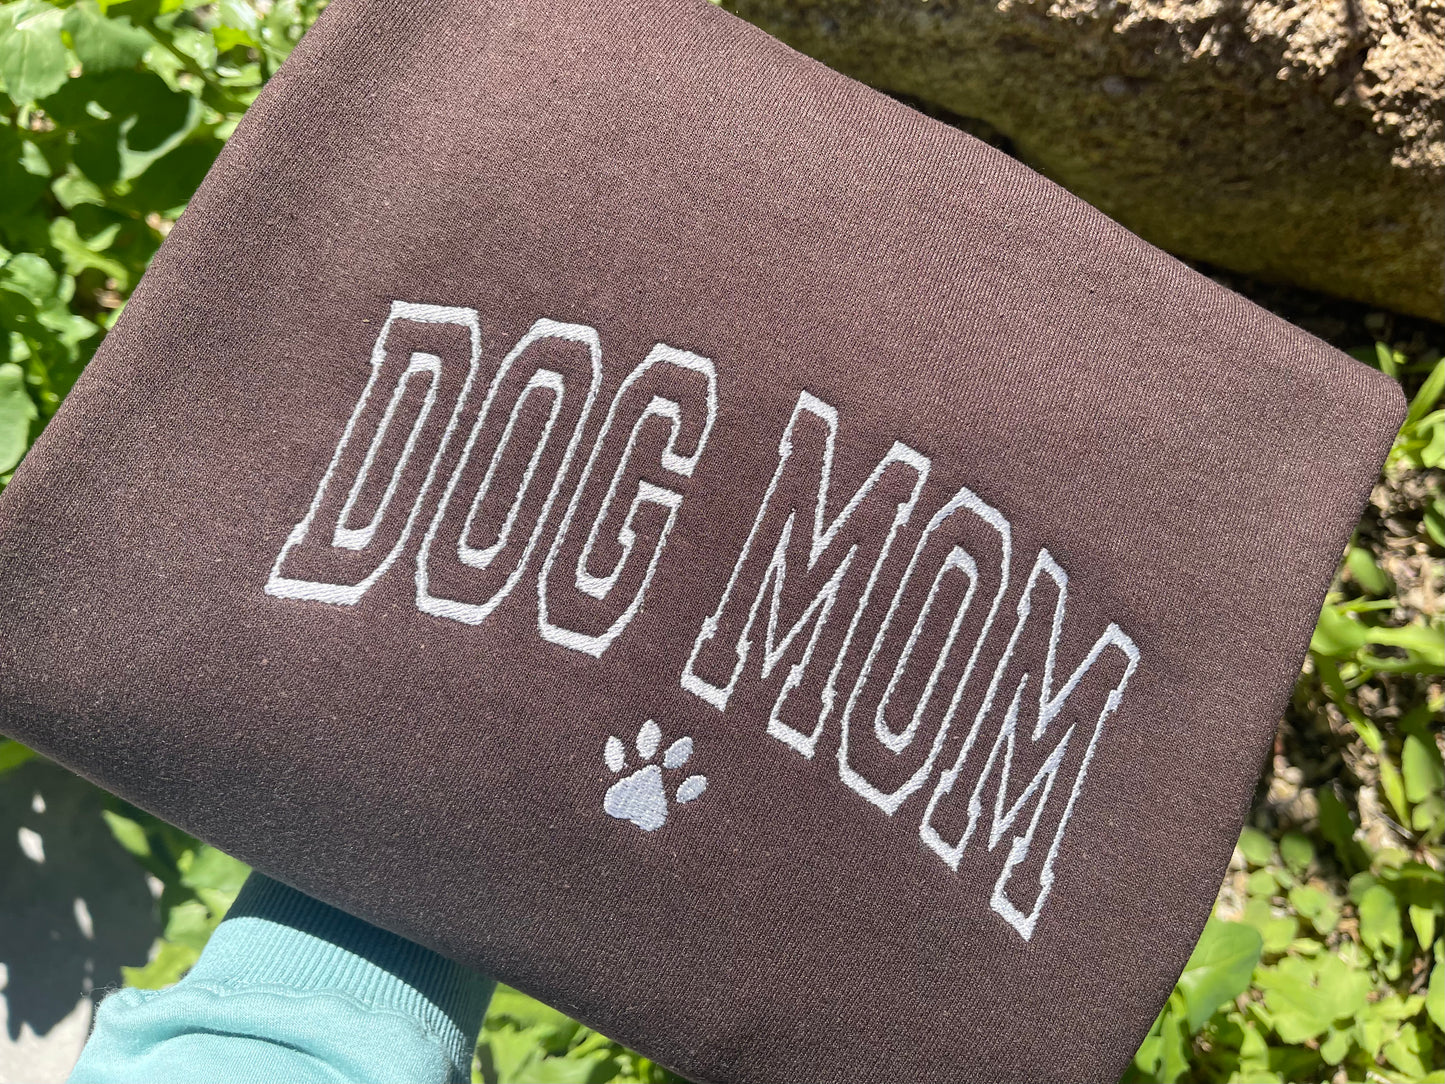 Dog Mom 🐾